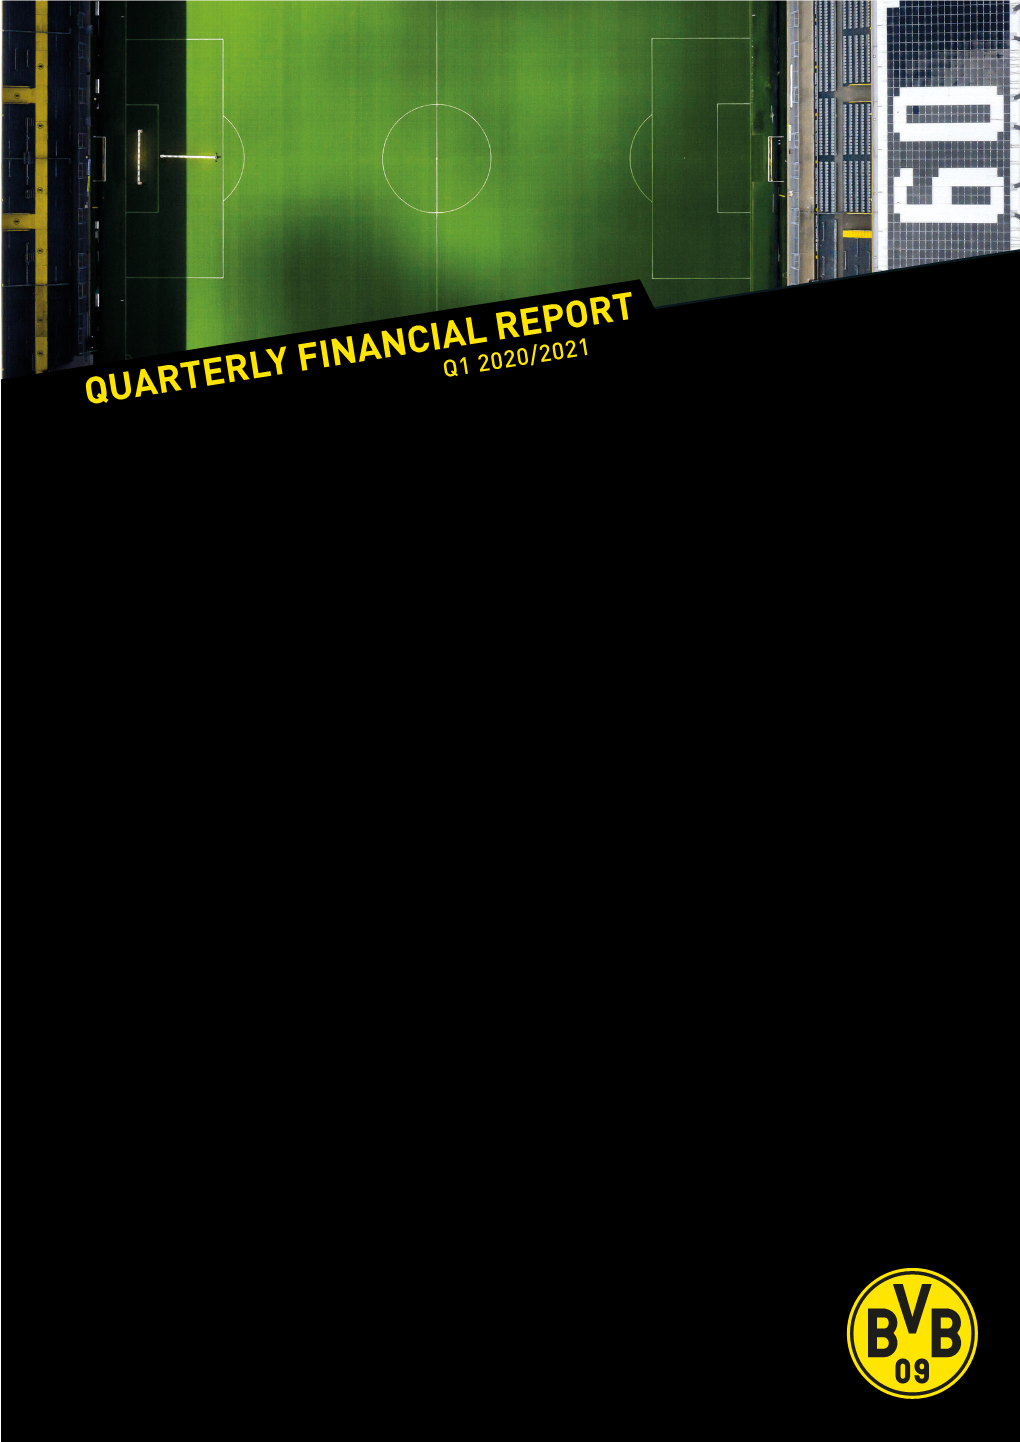 Bvb Quarterly Financial Report Q1 2020/2021